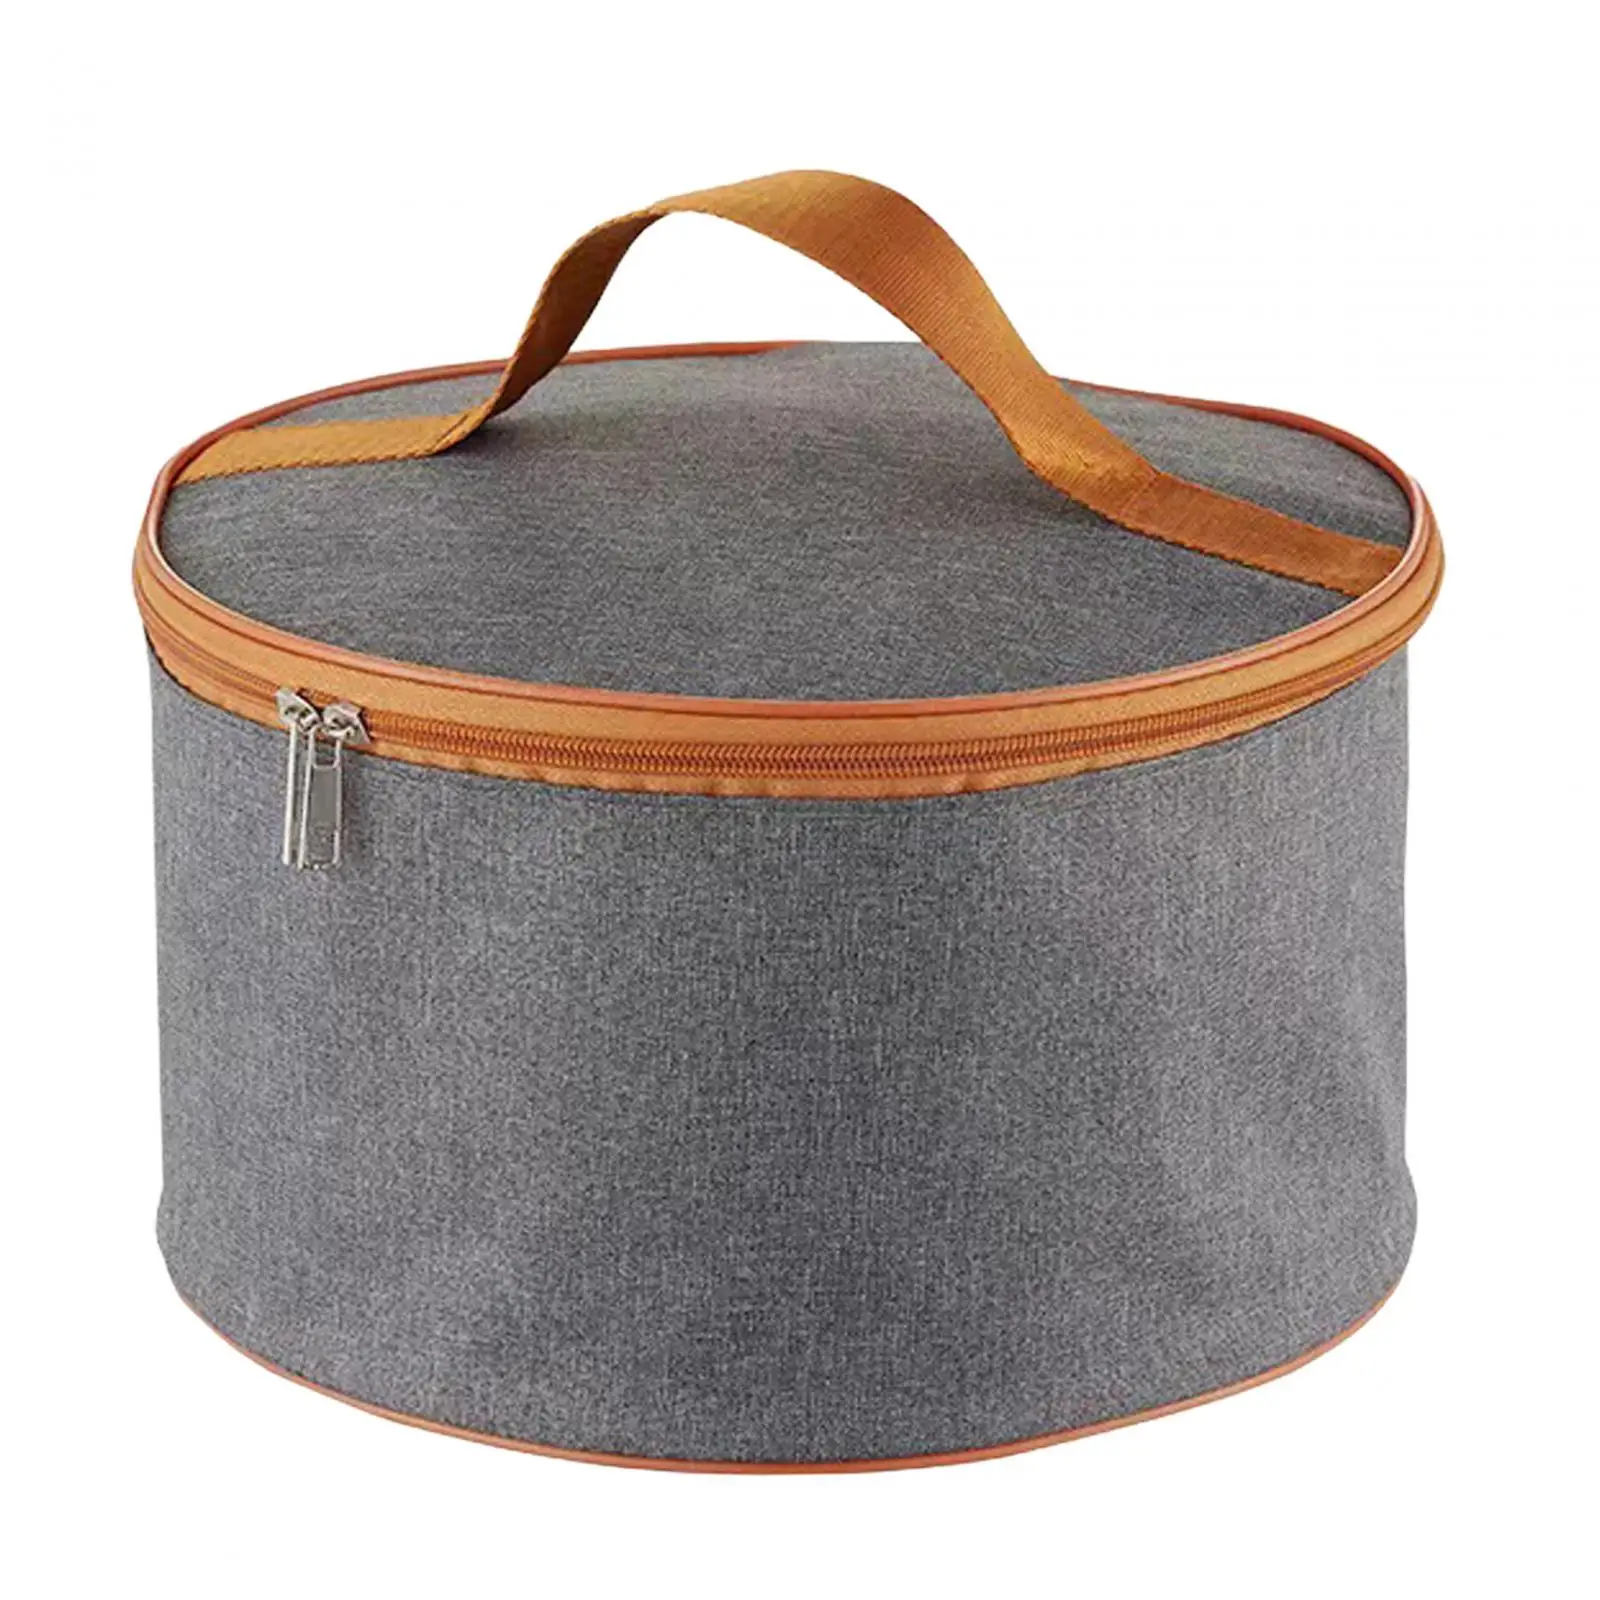 Camping Cookware Carry Bag Waterproof Portable Camping Pot Storage Bag